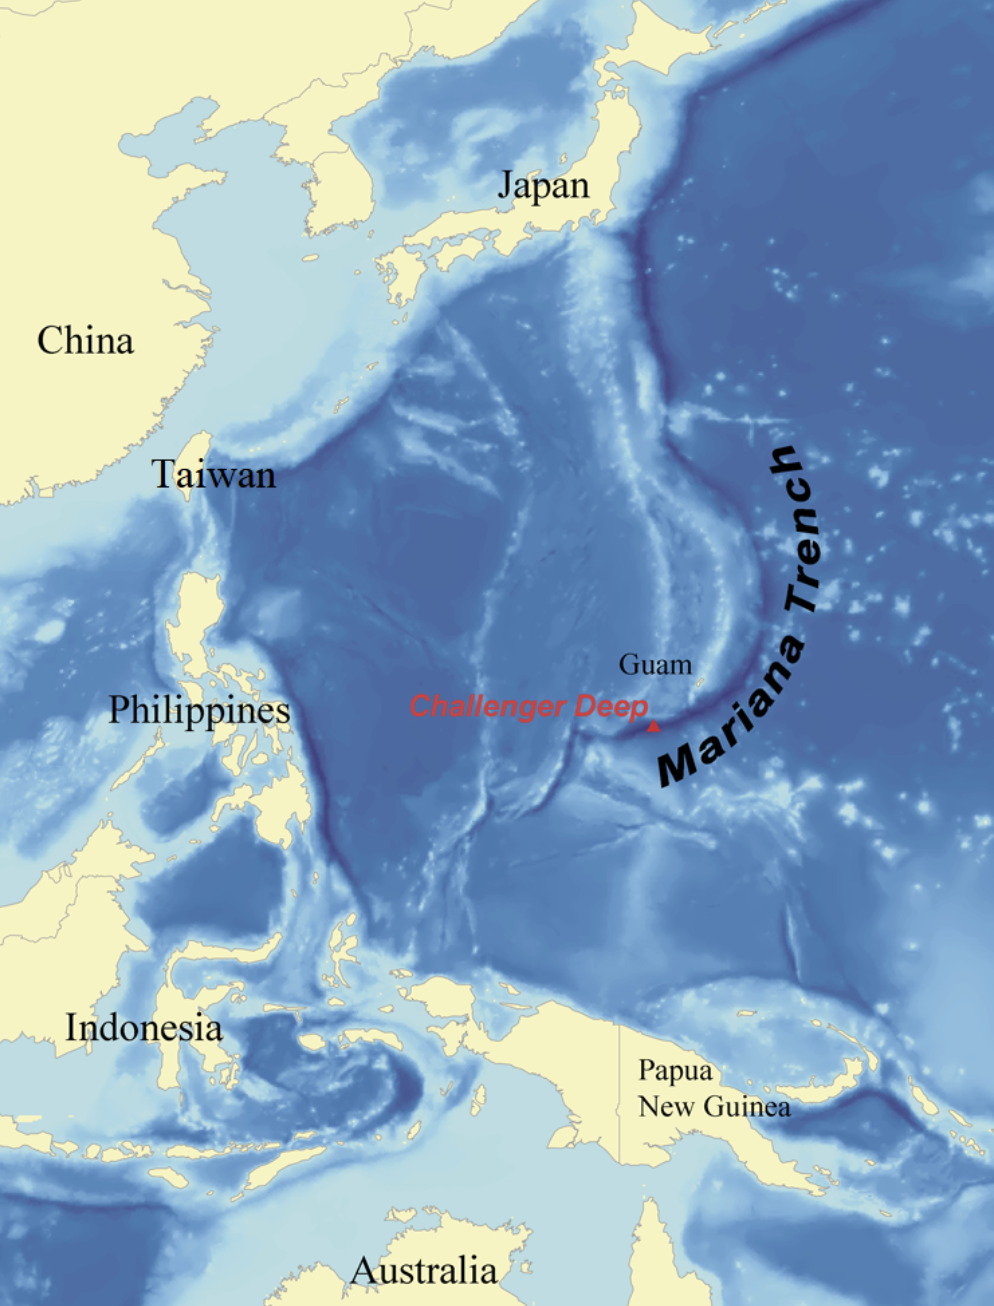 mariana trench location - China Taiwan Japan Philippines Guam Deep Indonesia Australia Trench Mariana Papua New Guinea